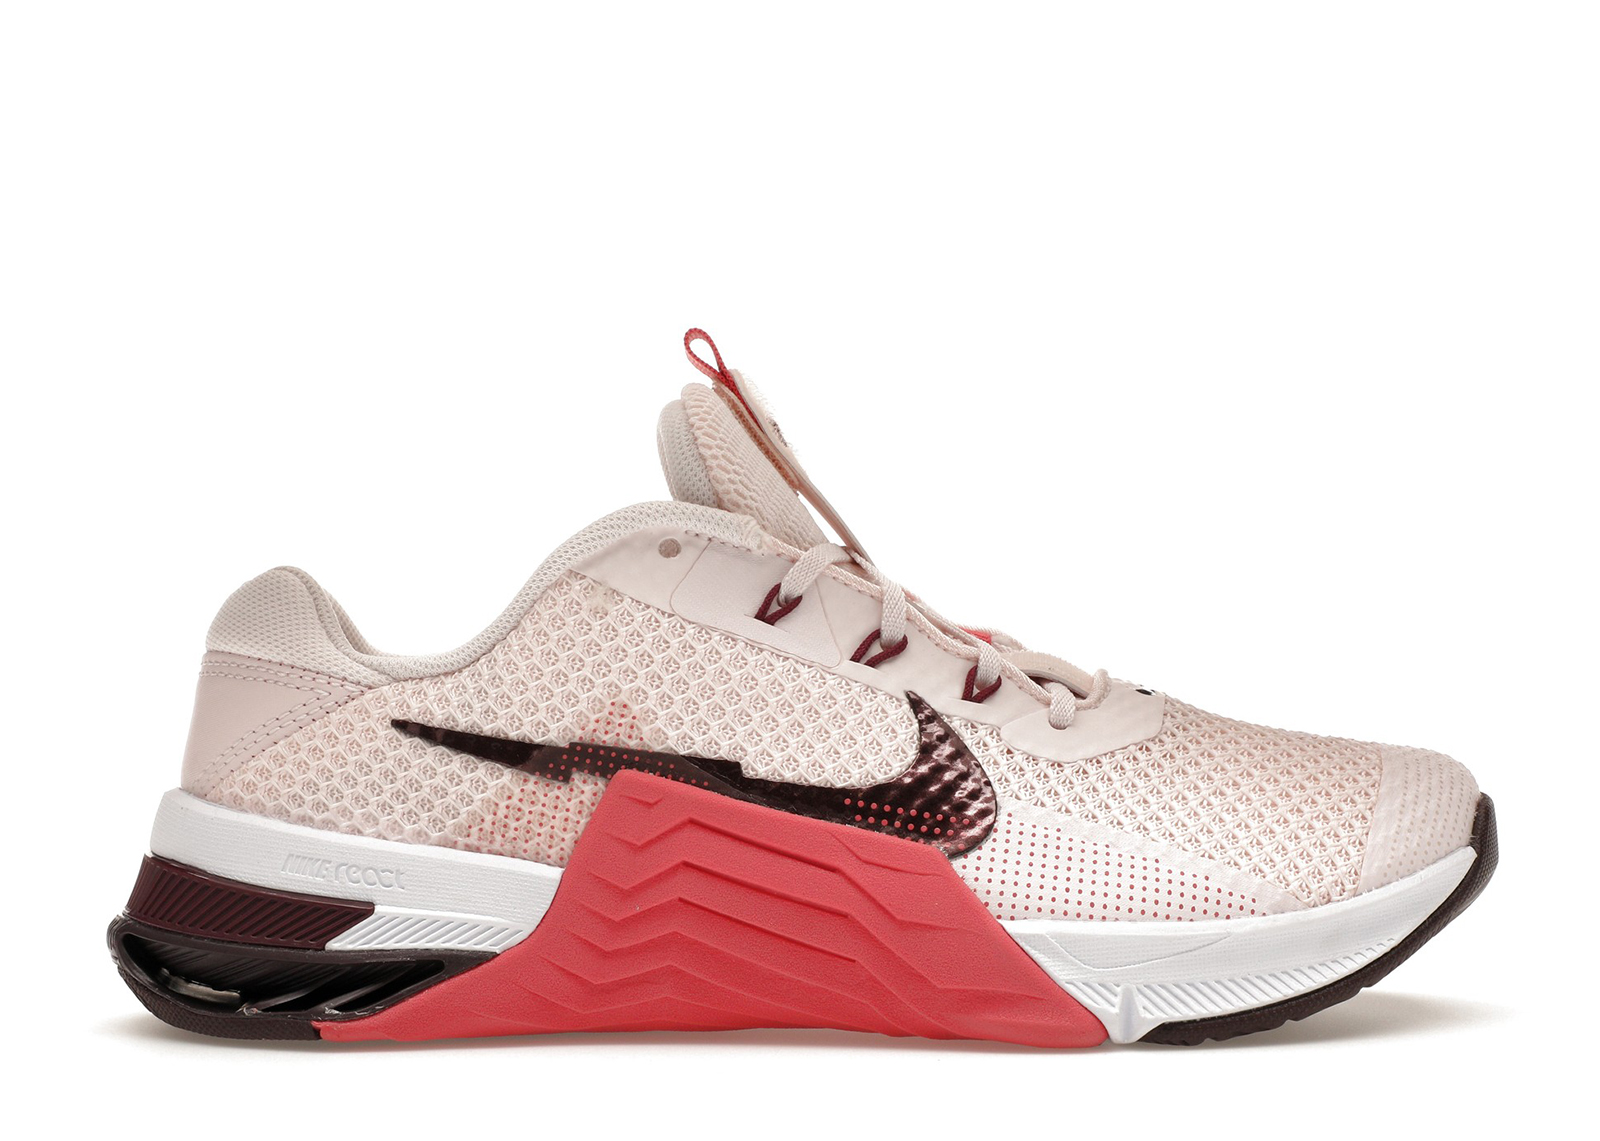 Nike Metcon 7 Light Soft Pink (Women's)